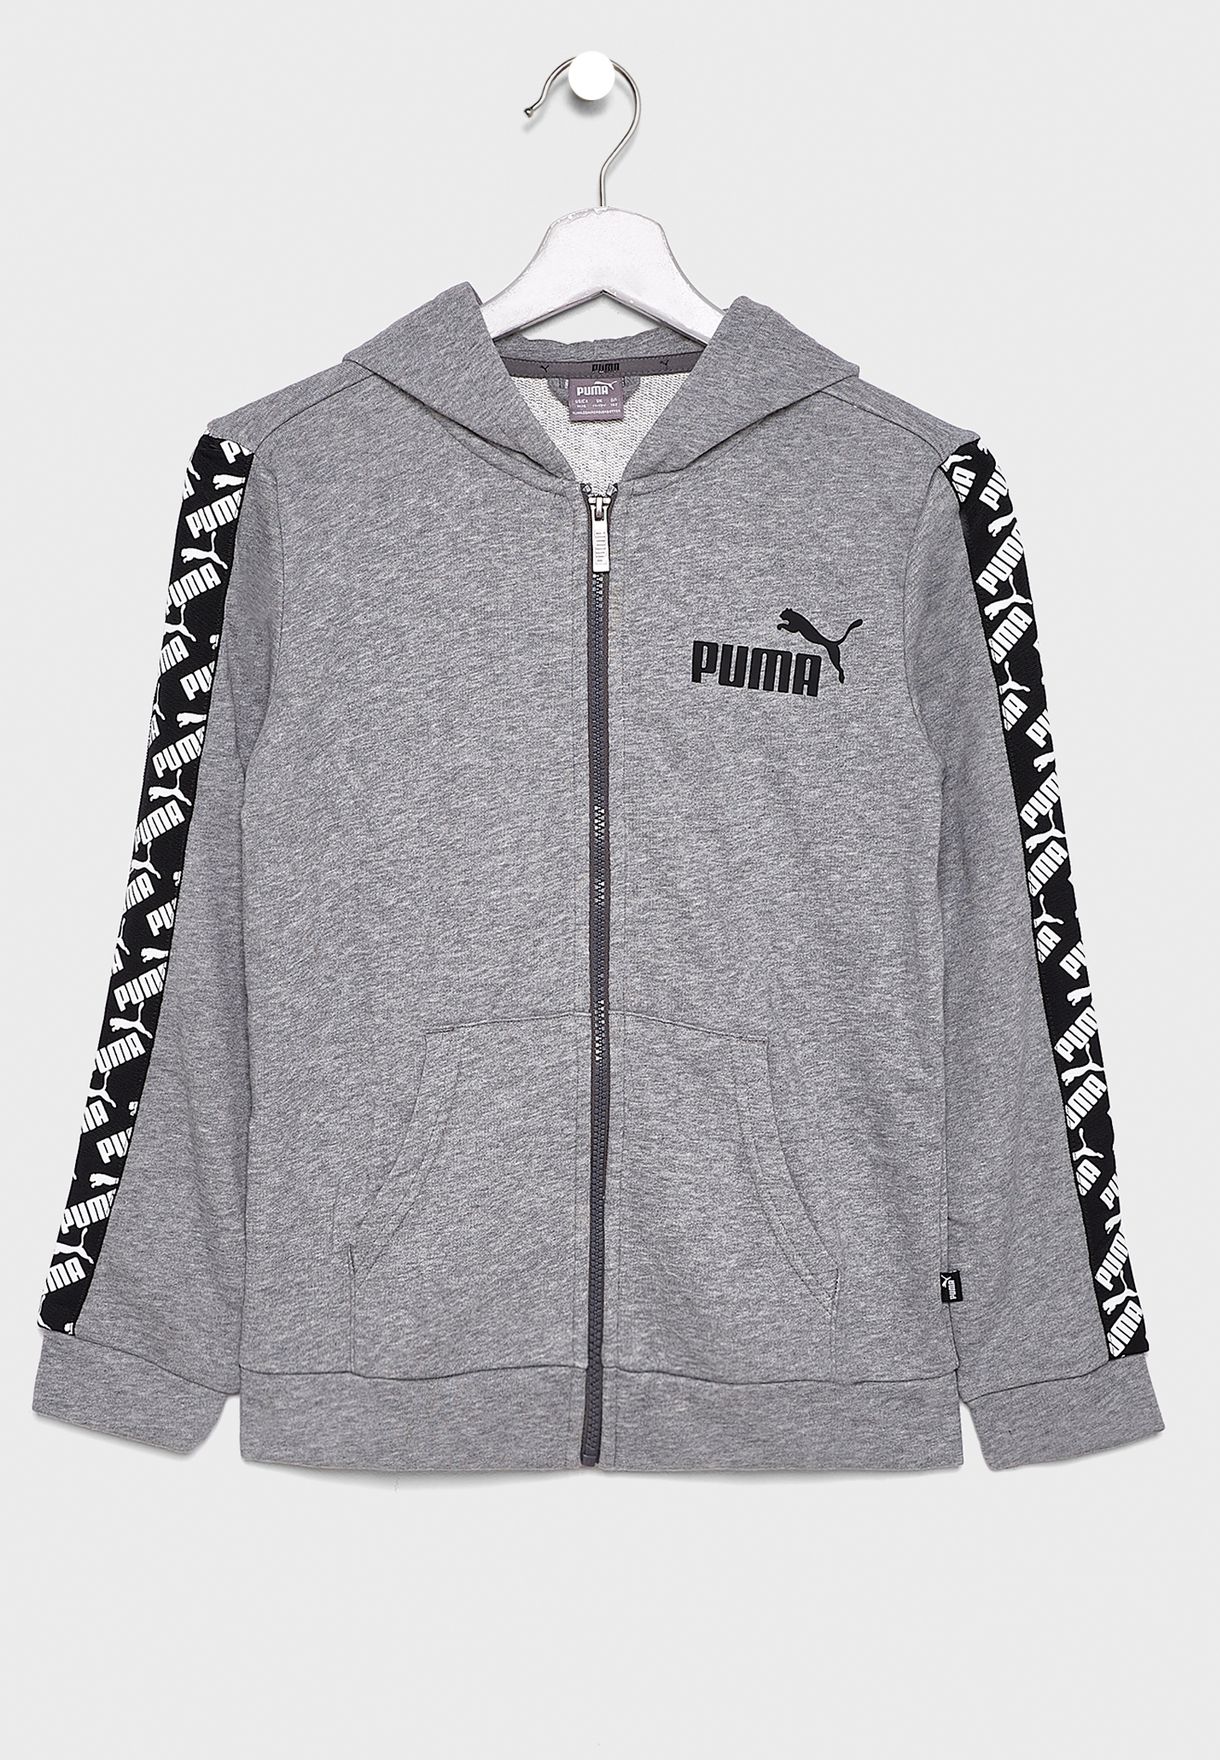 puma hoodie for kids